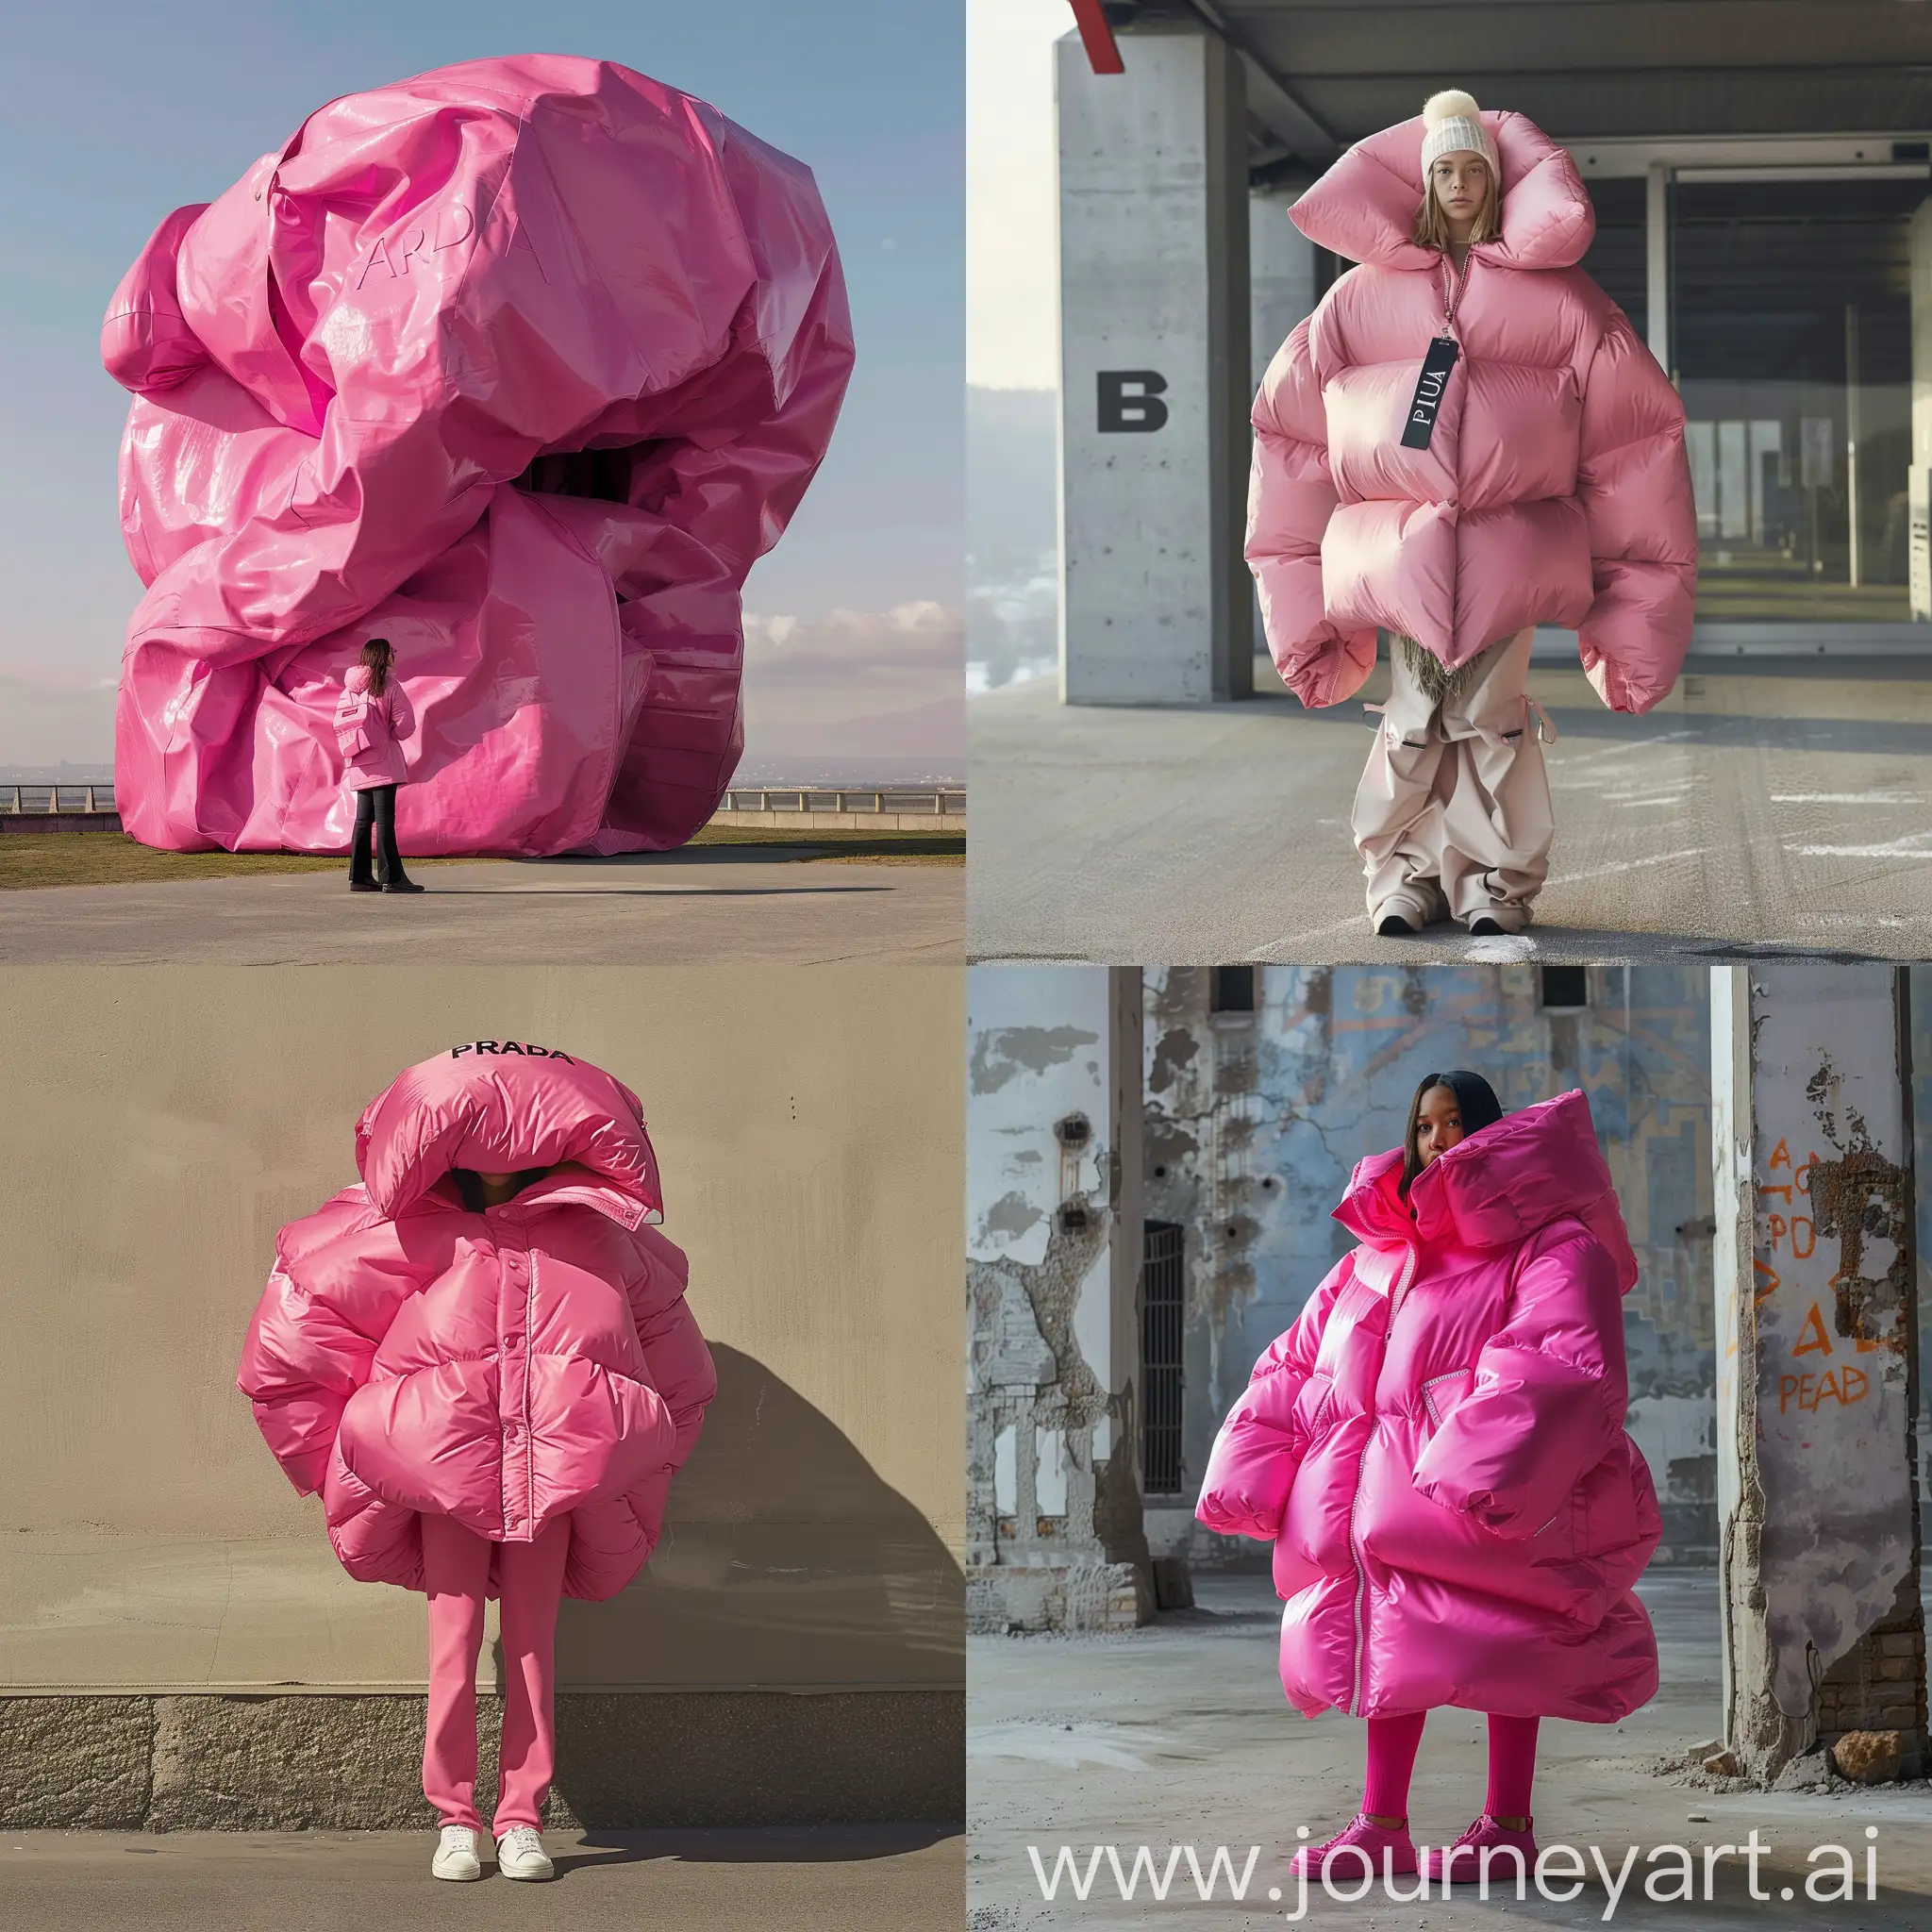 Fashionable-Girl-in-Oversized-Pink-Prada-Jacket-amidst-Brutalist-Architecture